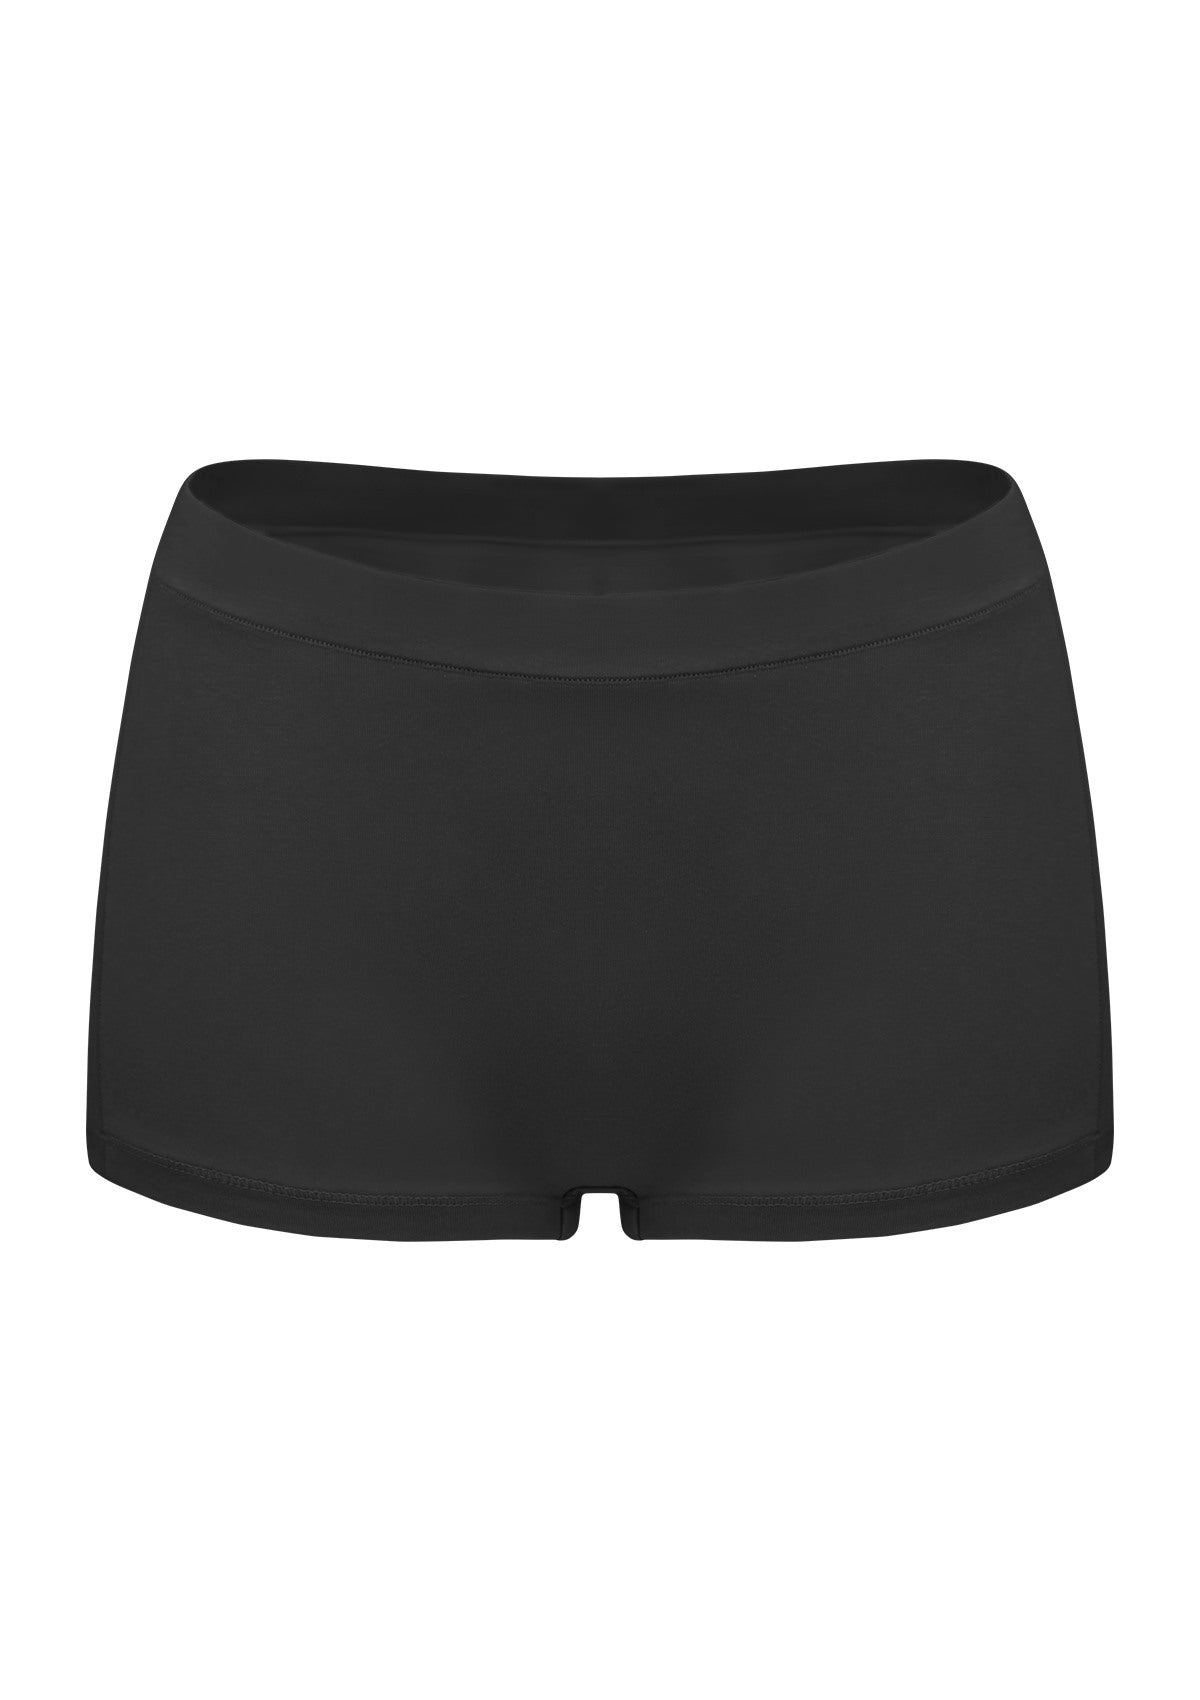 All-Day Comfort Mid-Rise Cotton Boyshorts Underwear 3 Pack - XL / Black+Beige+Green